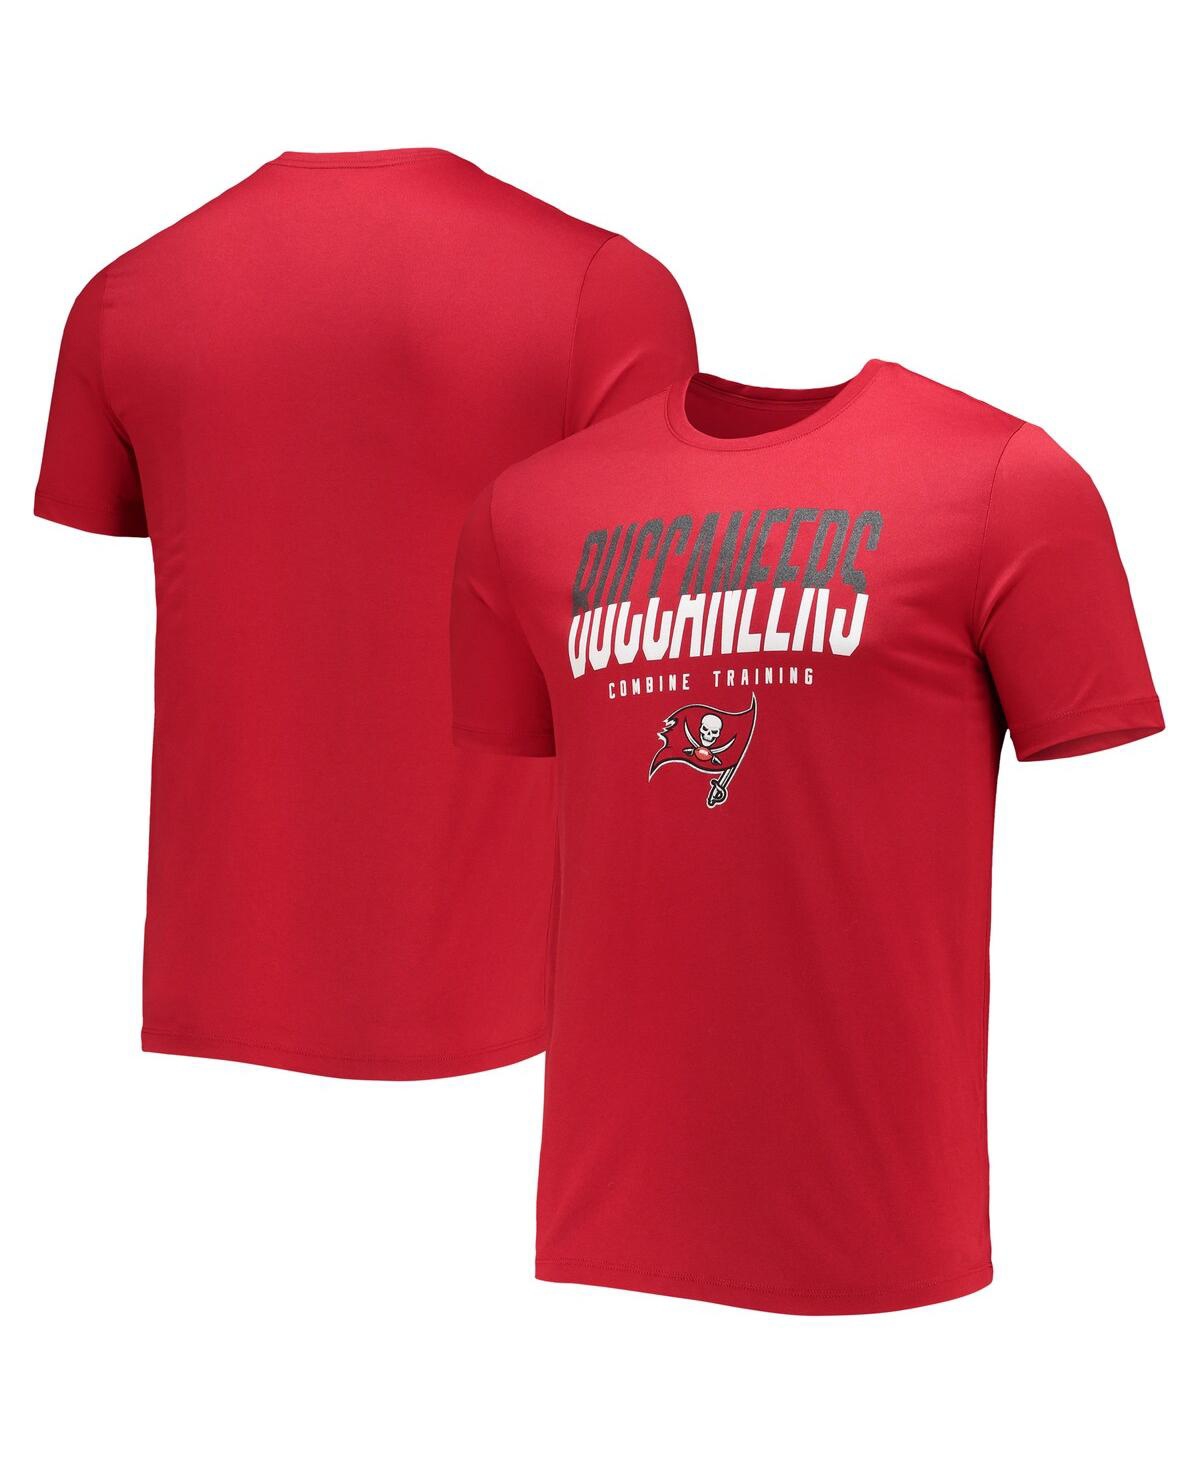 Shop New Era Men's  Red Tampa Bay Buccaneers Combine Authentic Big Stage T-shirt